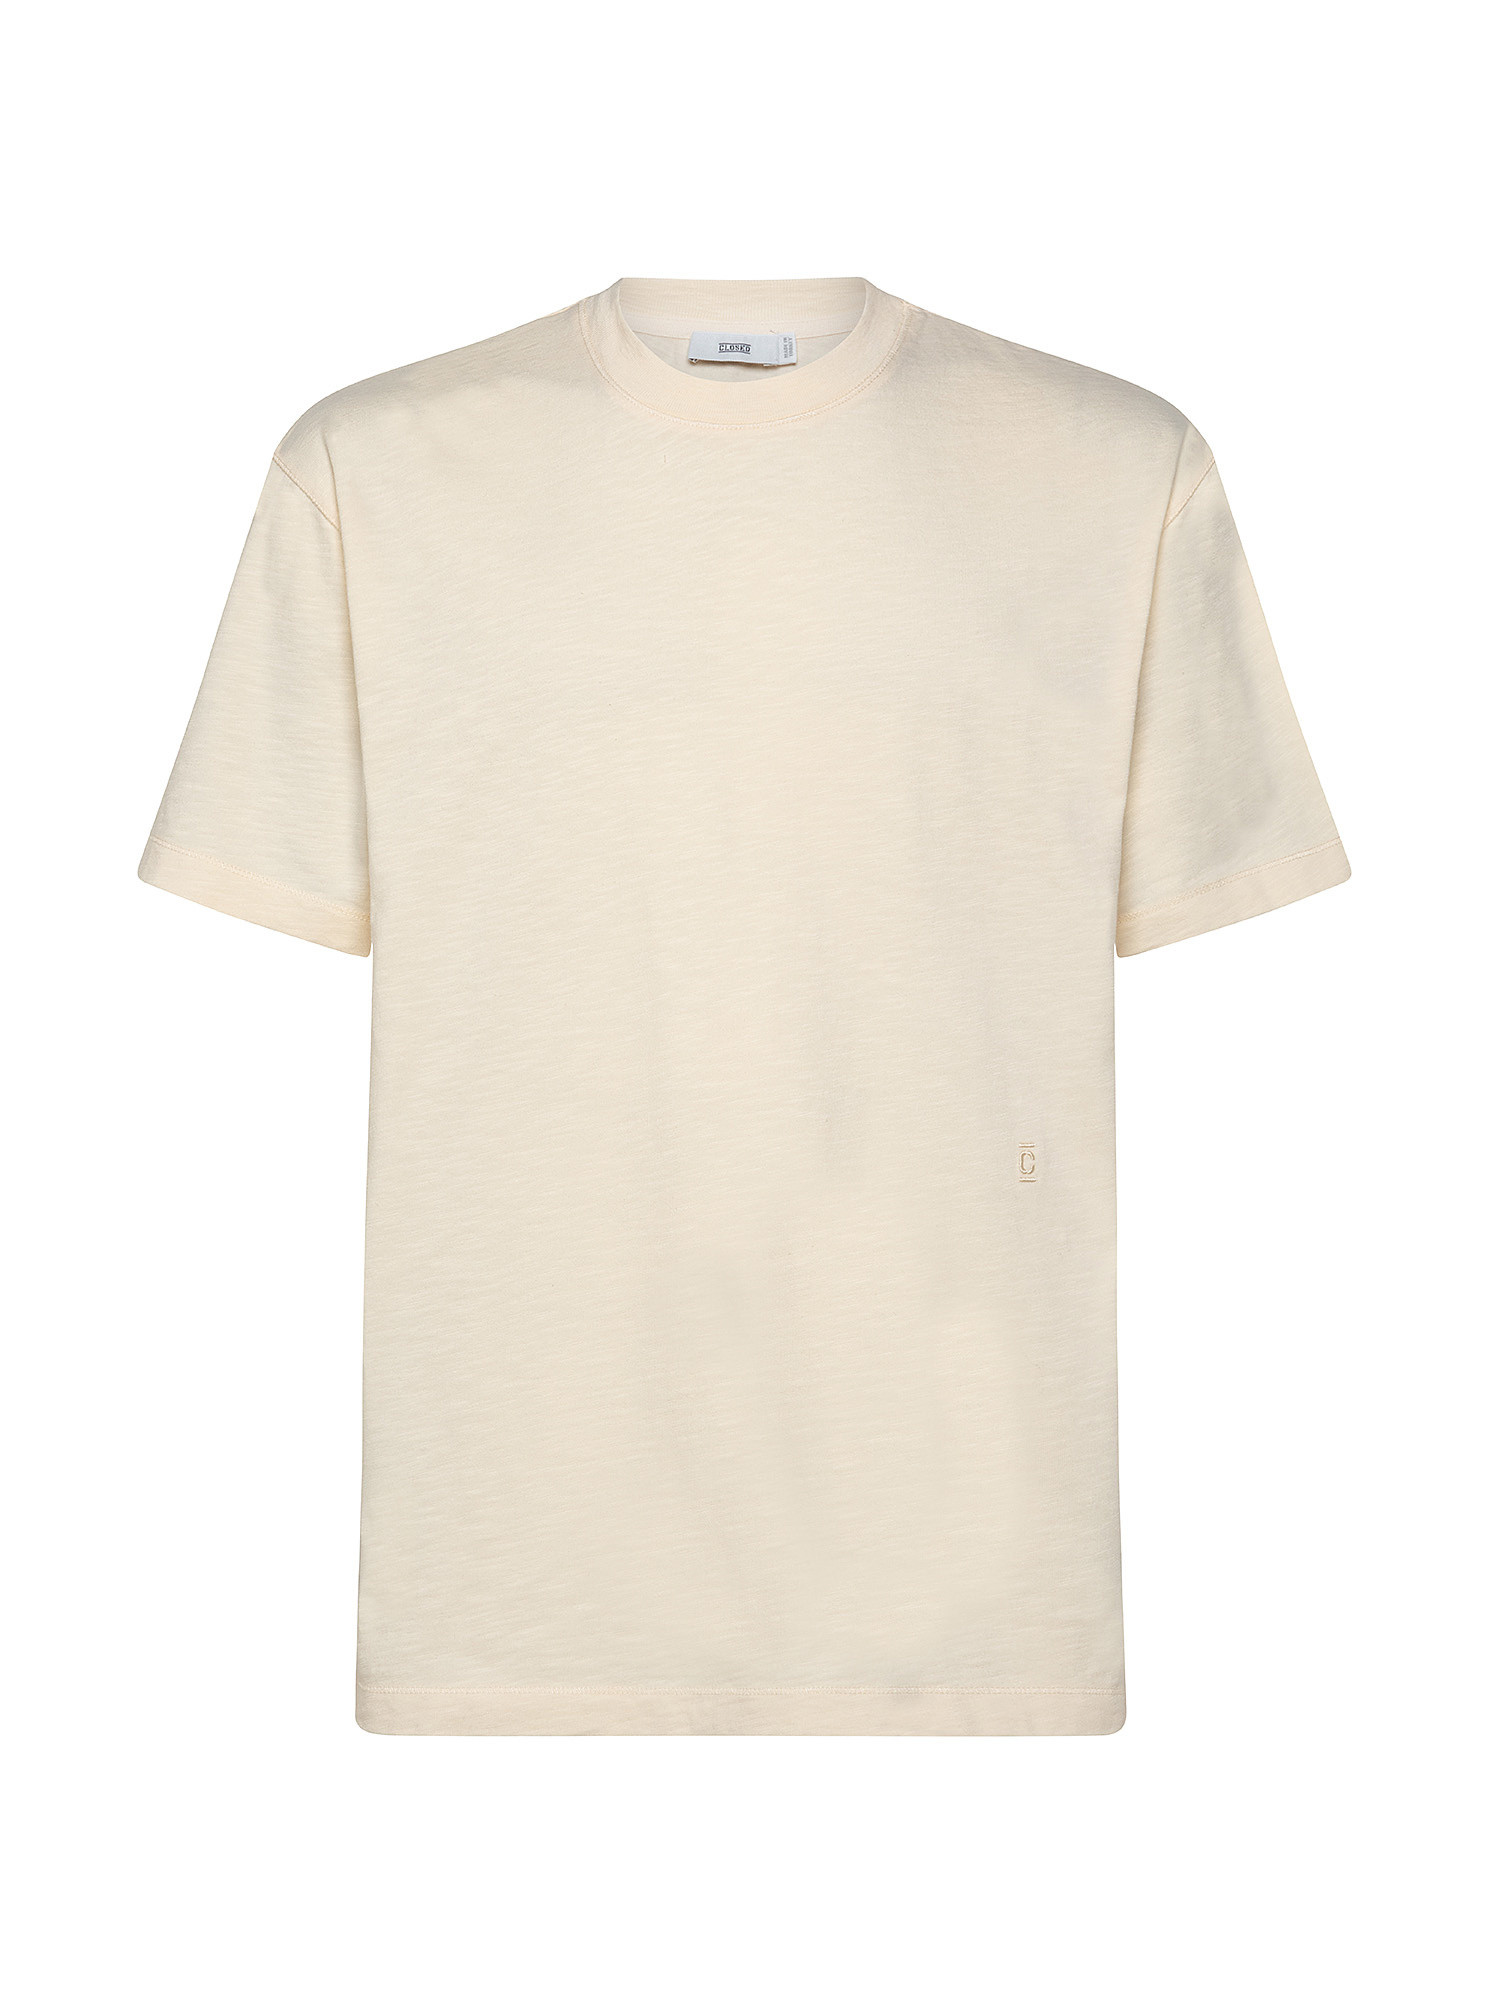 Soft T-Shirt, White Cream, large image number 0